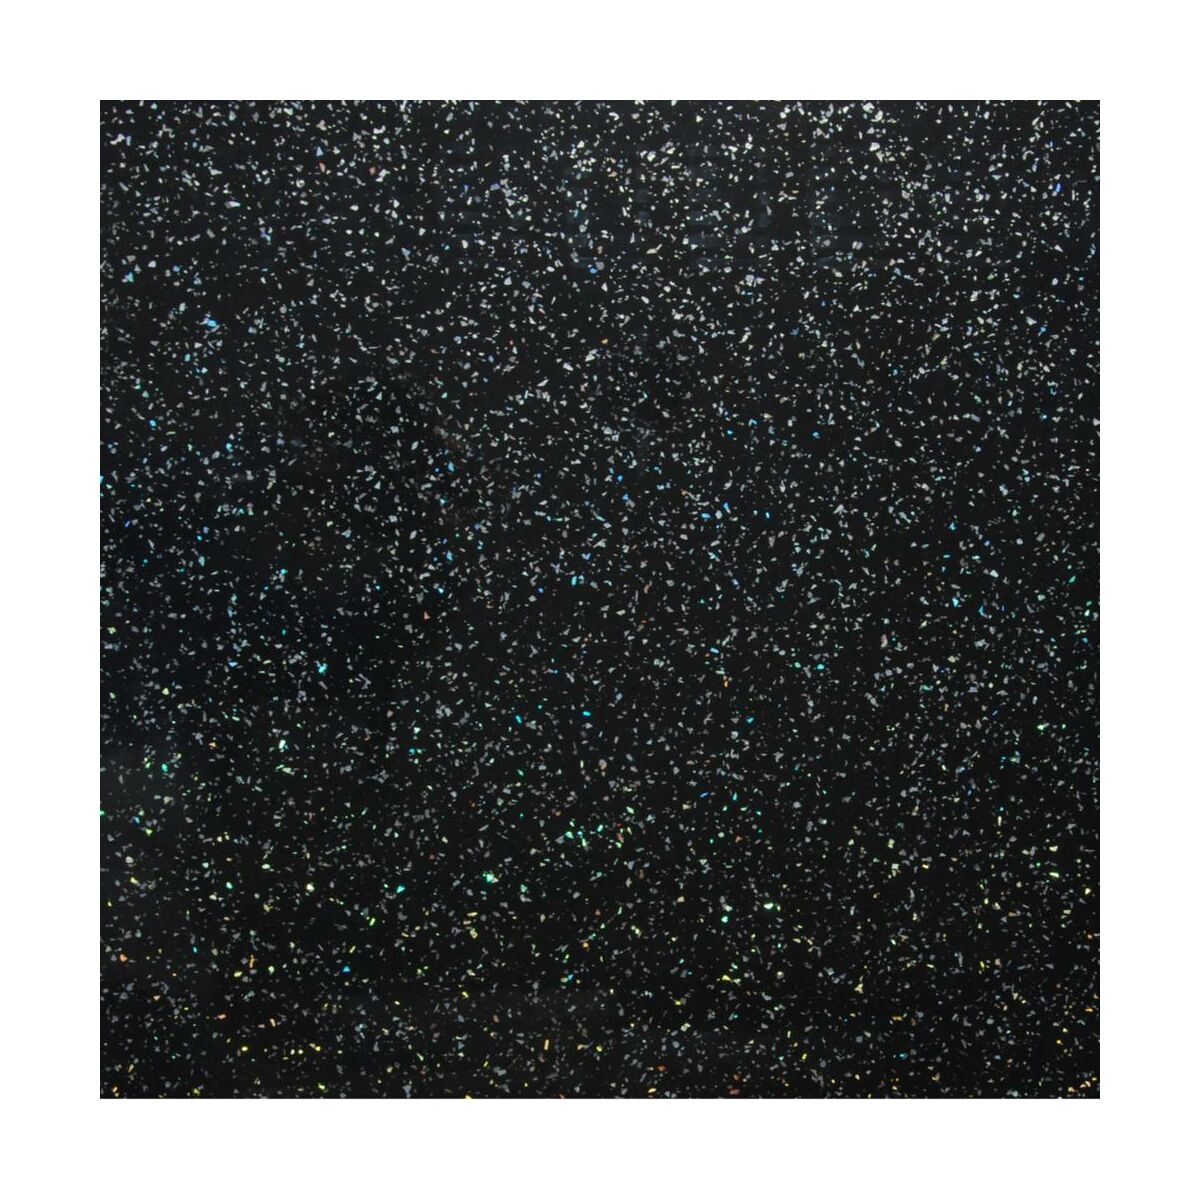 Blat kuchenny laminowany black galaxy 033S Biuro Styl